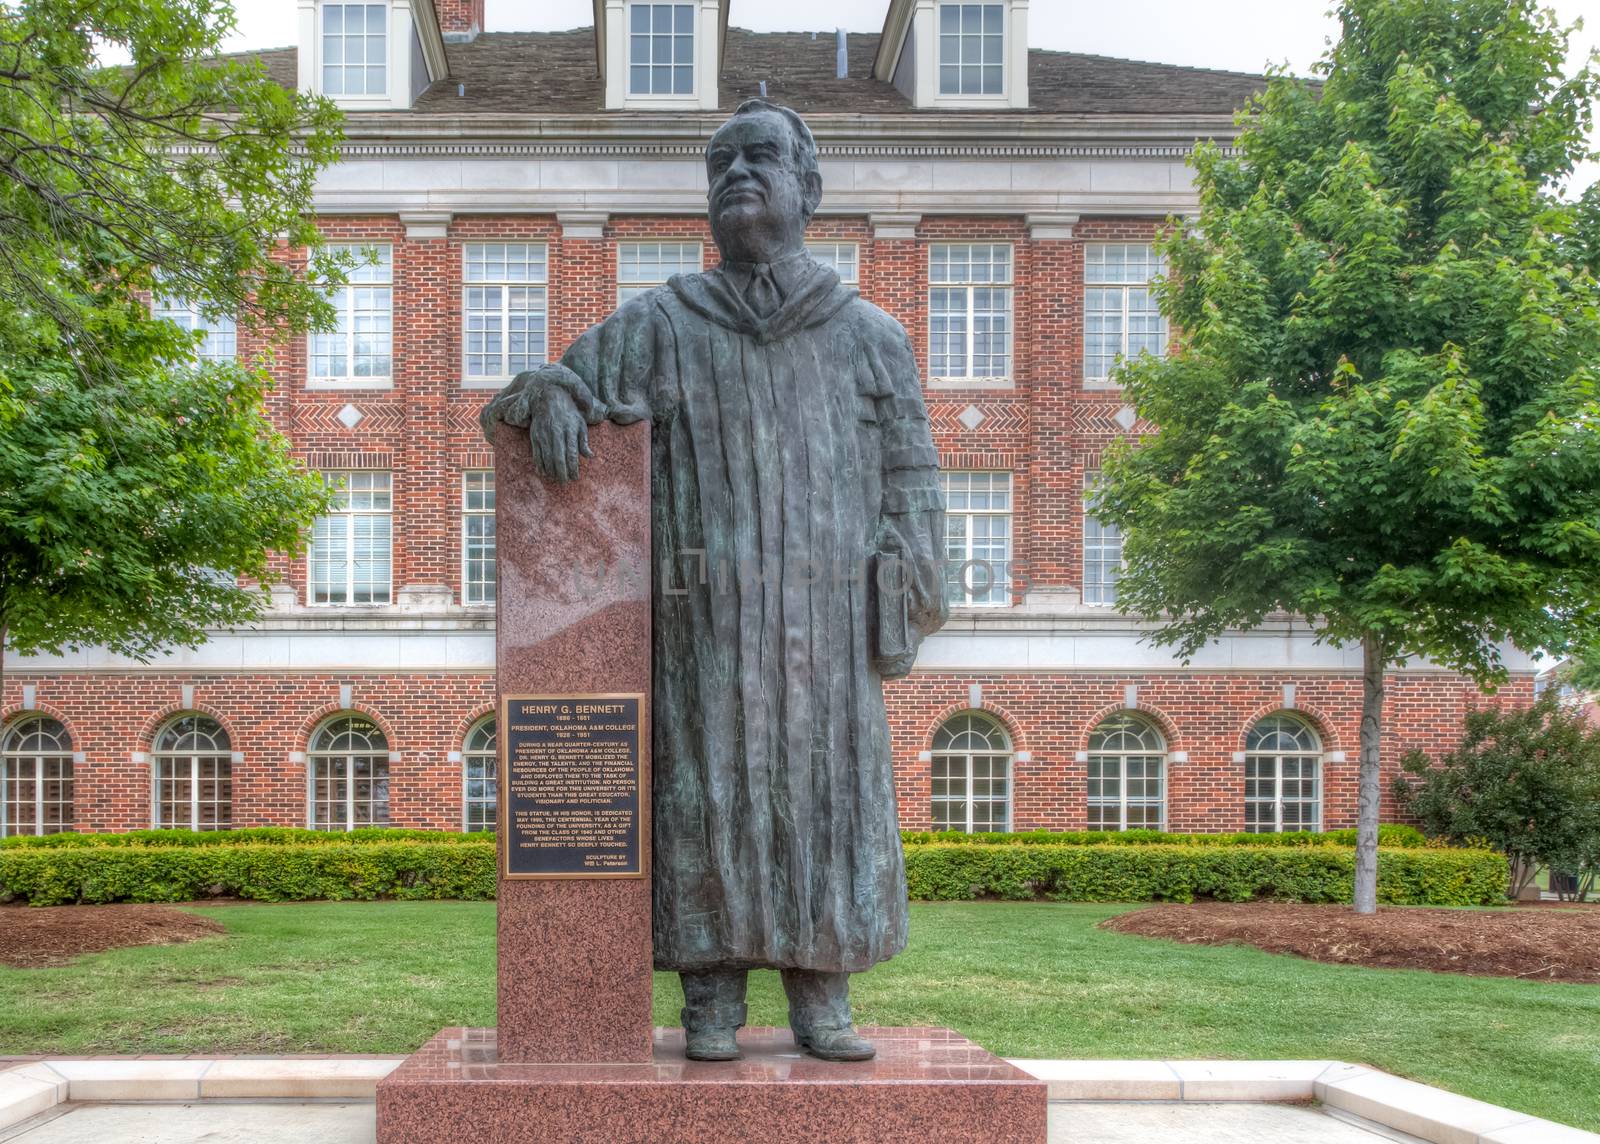 Henry G. Bennett Statue at Oklahoma State University by wolterk